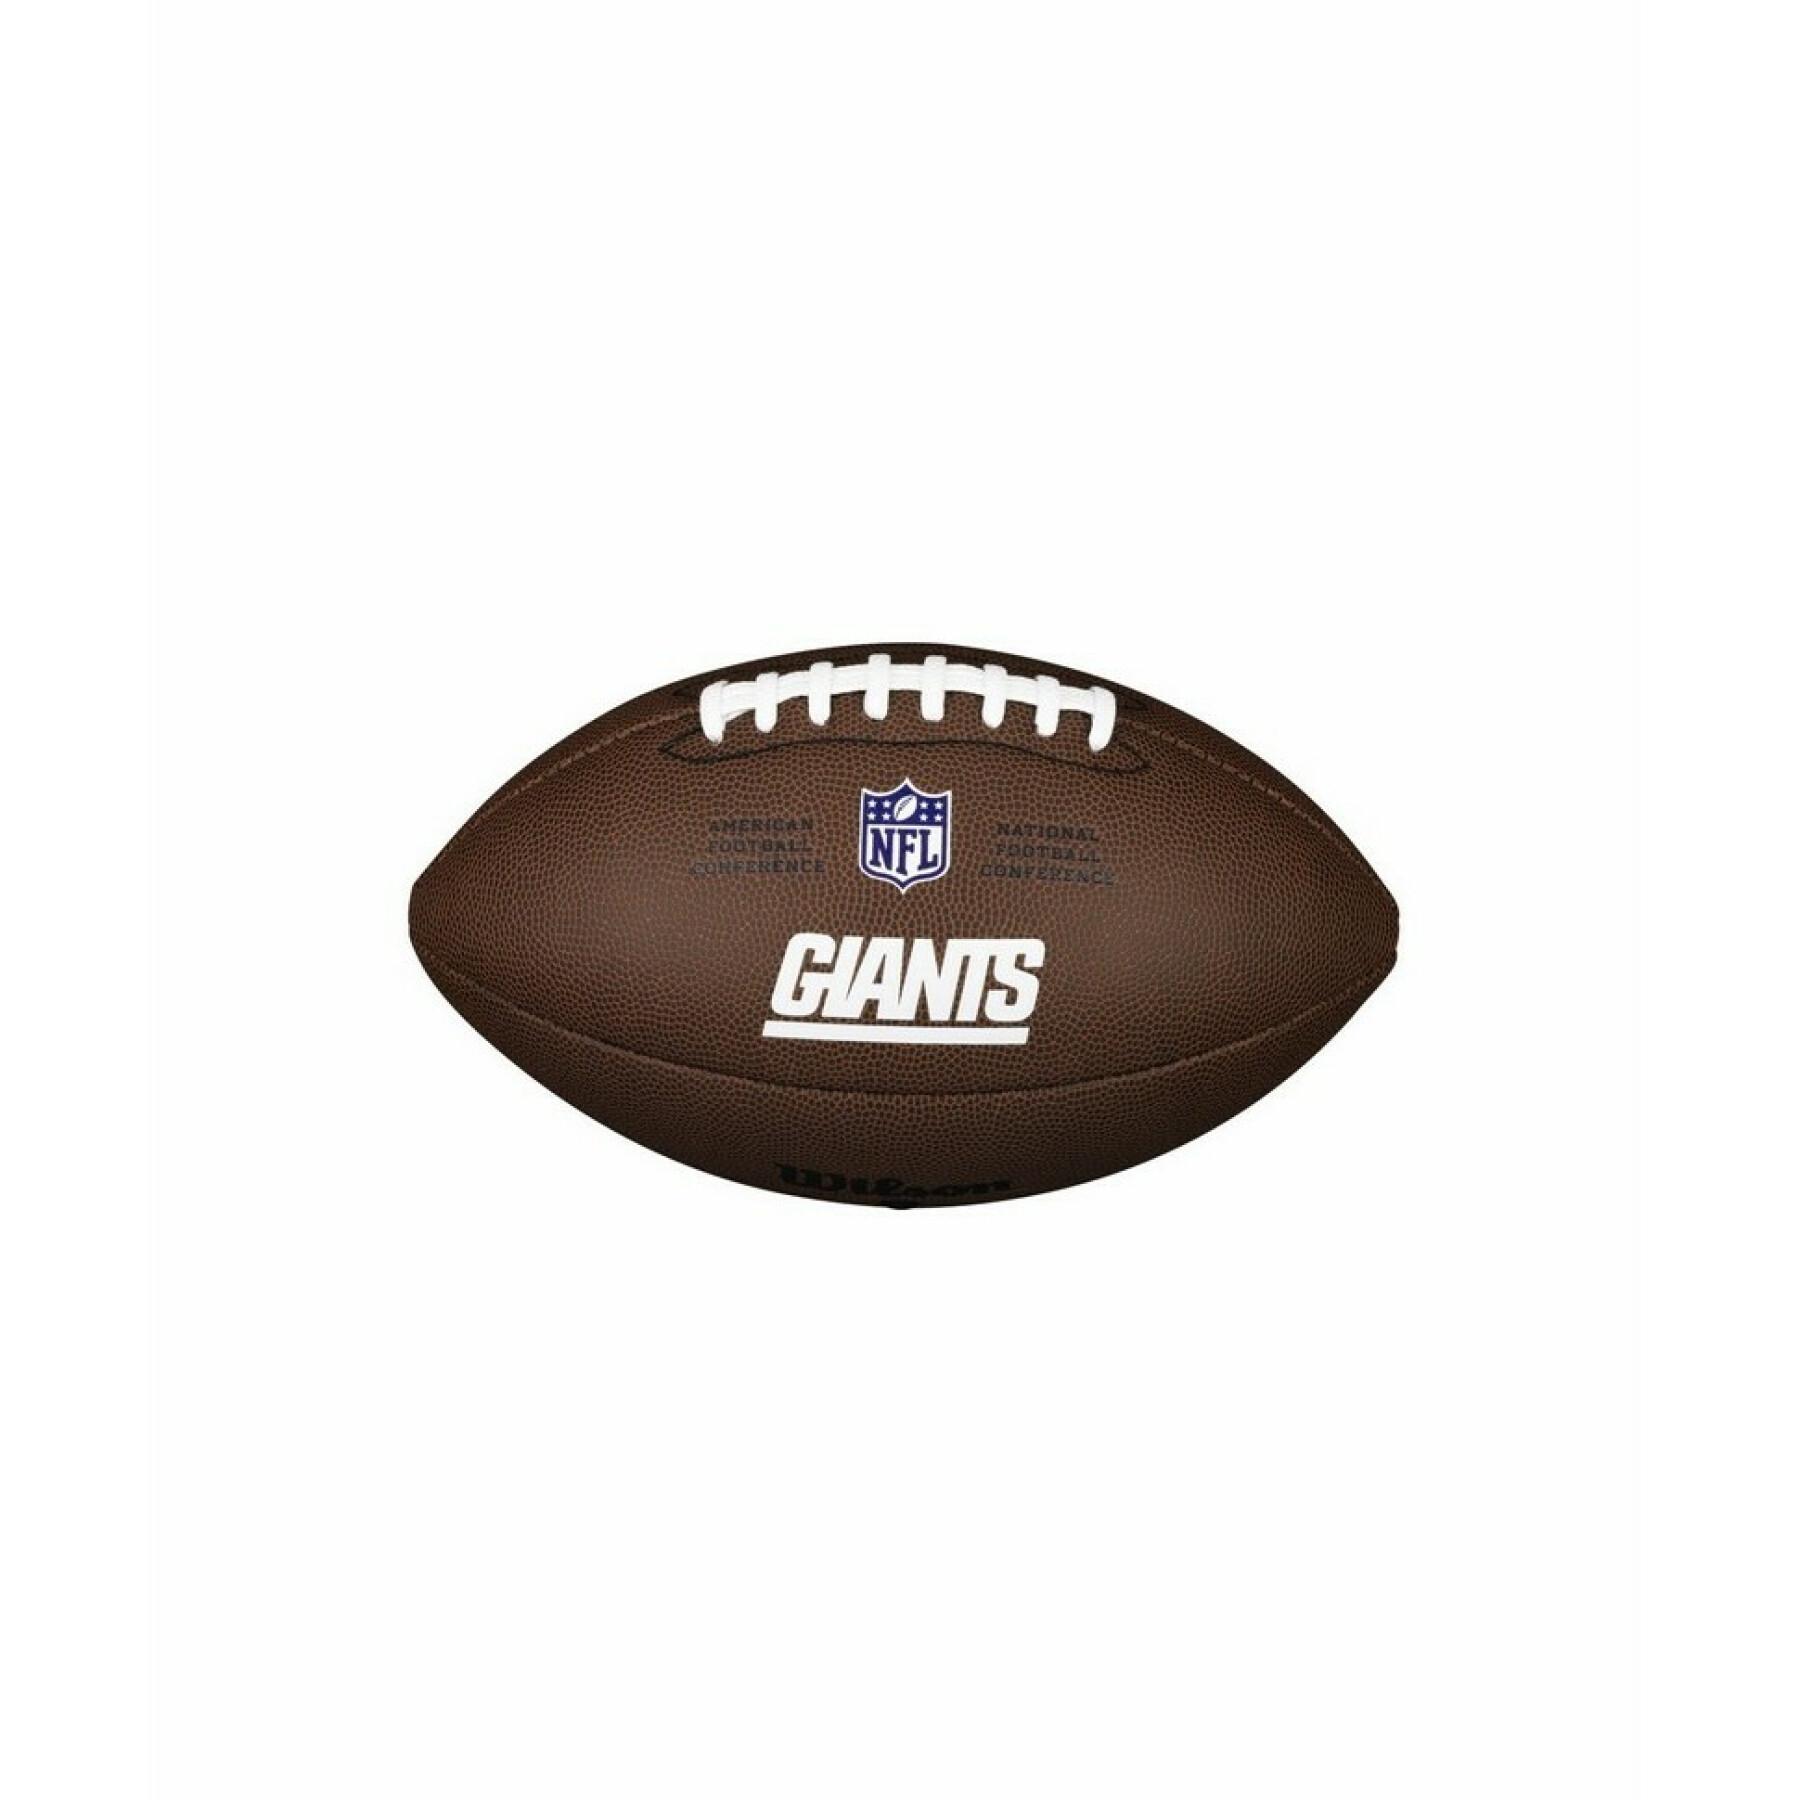 Bola Wilson Giants NFL com licença